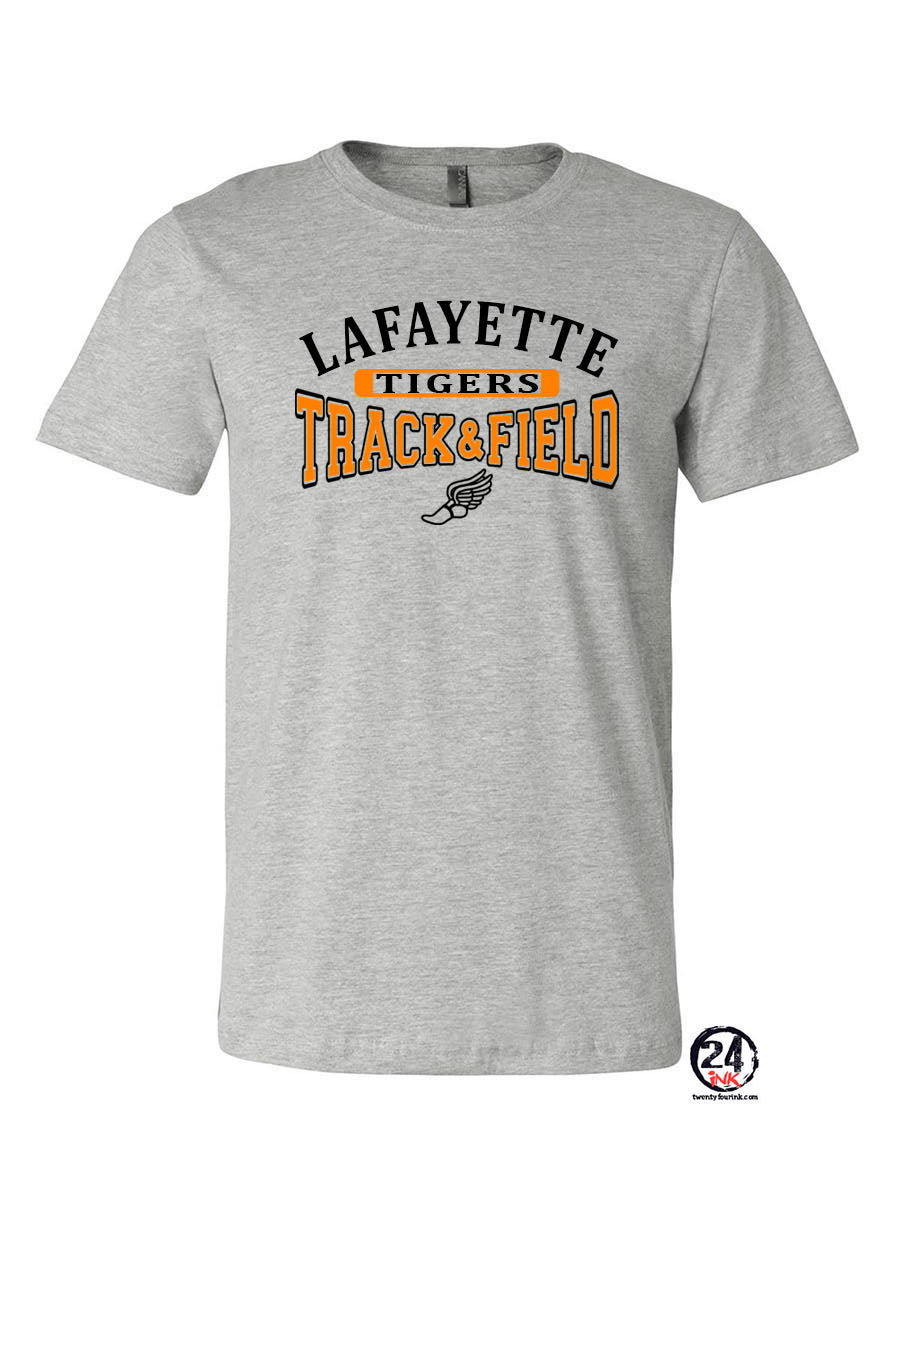 Lafayette Track Design 2 T-Shirt